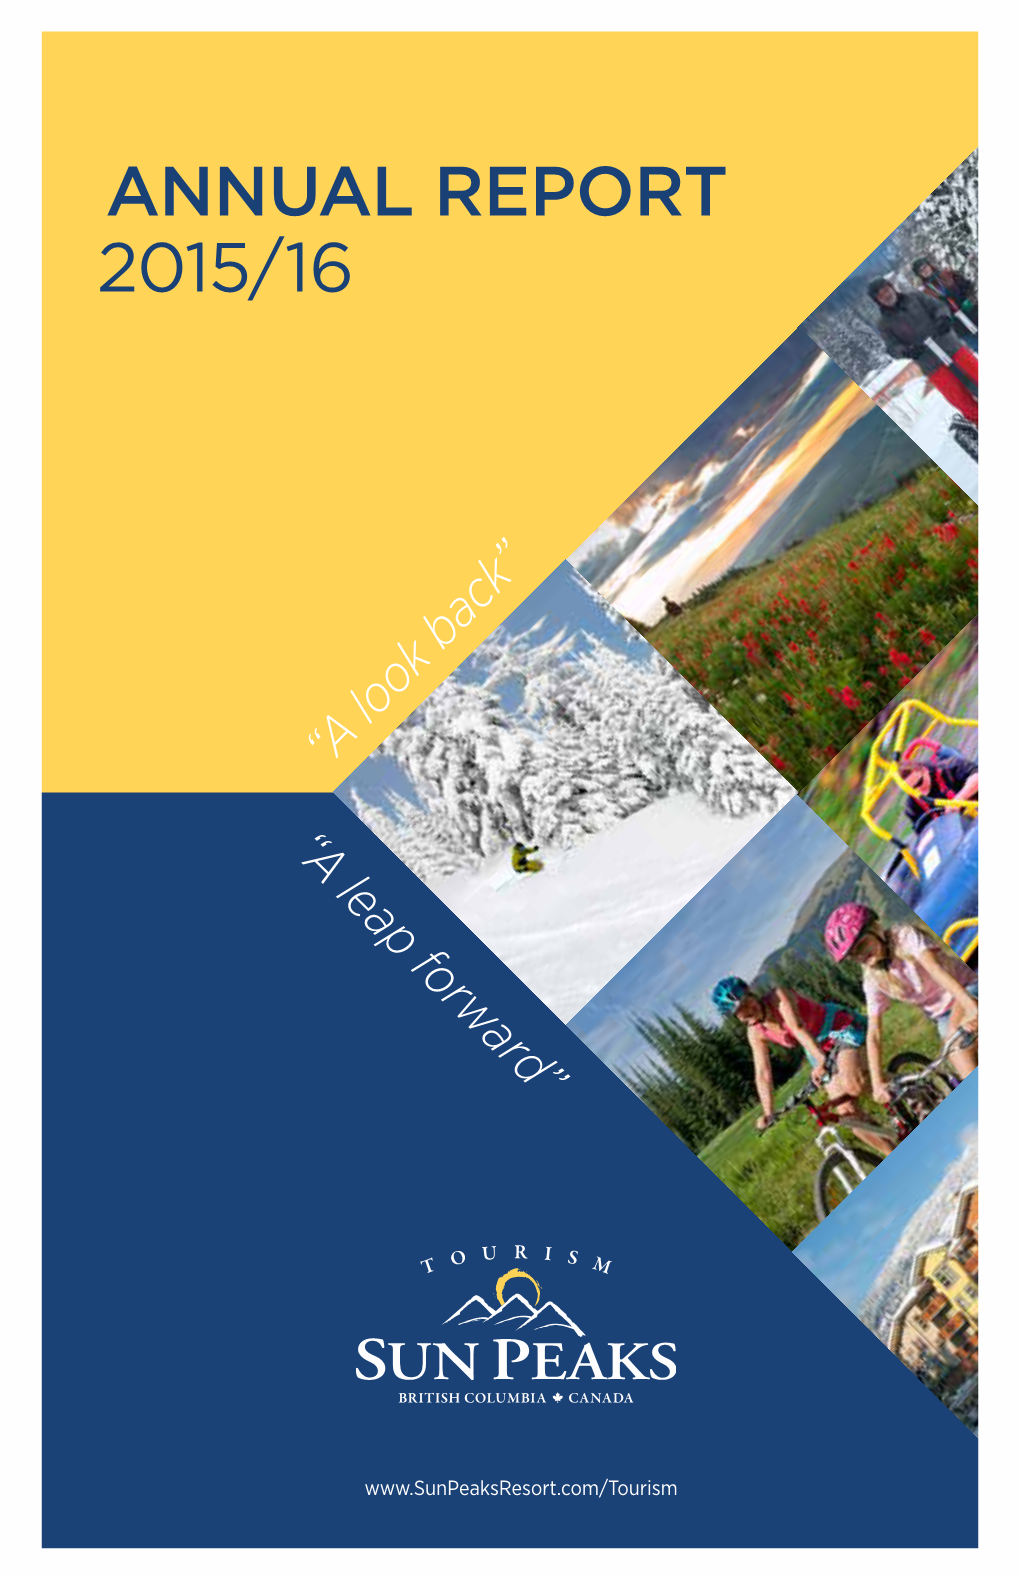 2015/16 Annual Report